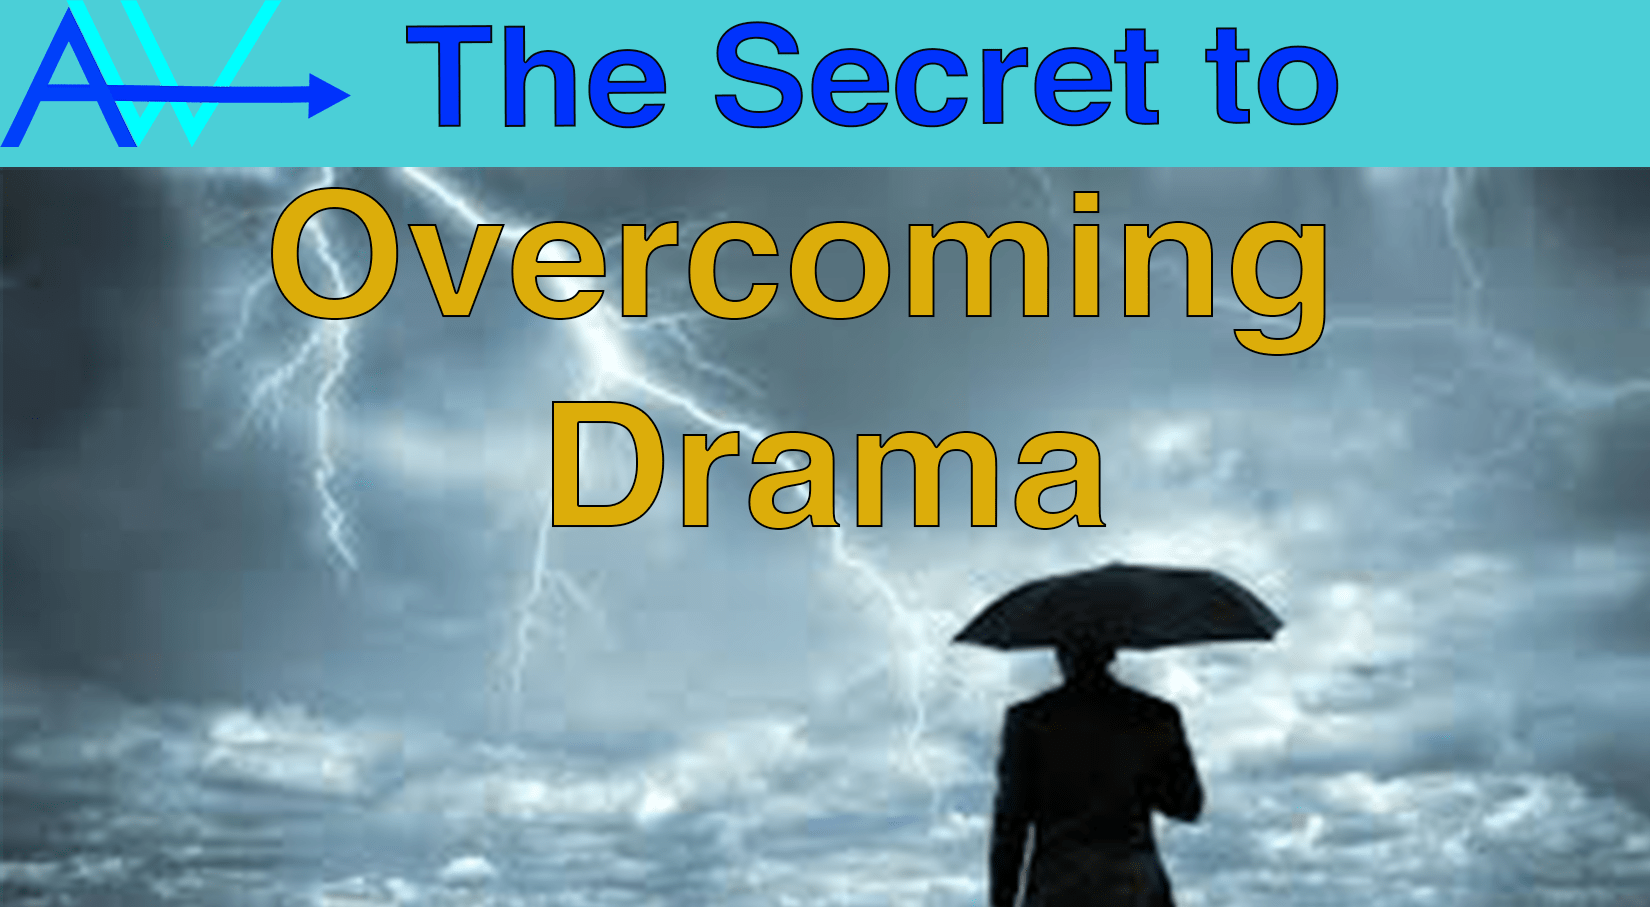 The secret to overcoming drama